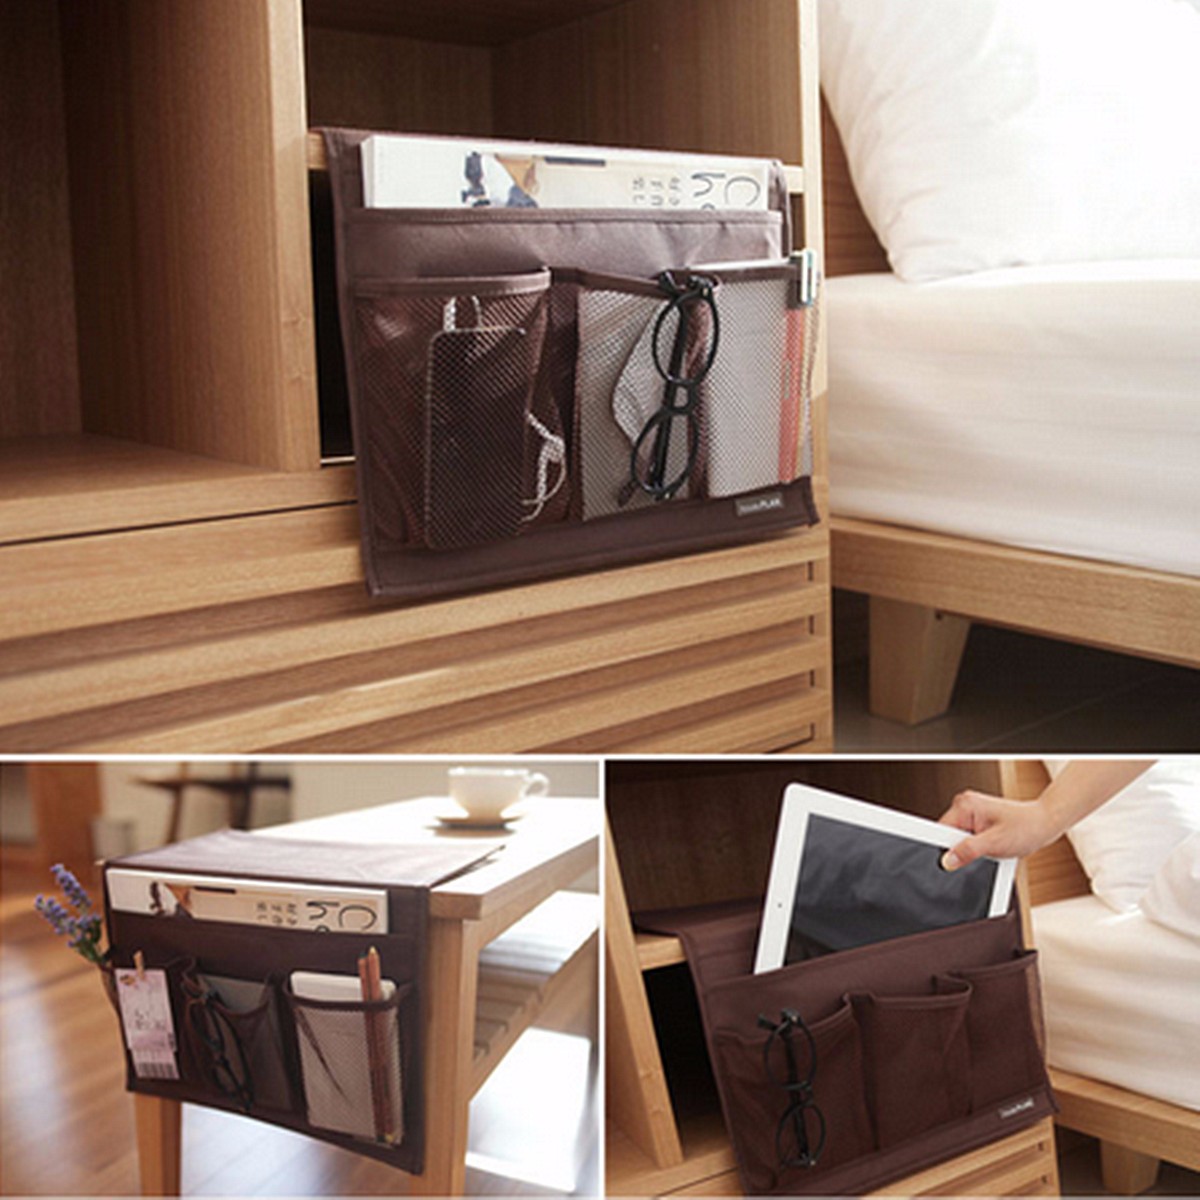 Bedside-Caddy-Storage-Mattress-Pocket-Holder-Remote-Hanging-Bed-Books-Organizer-1099982